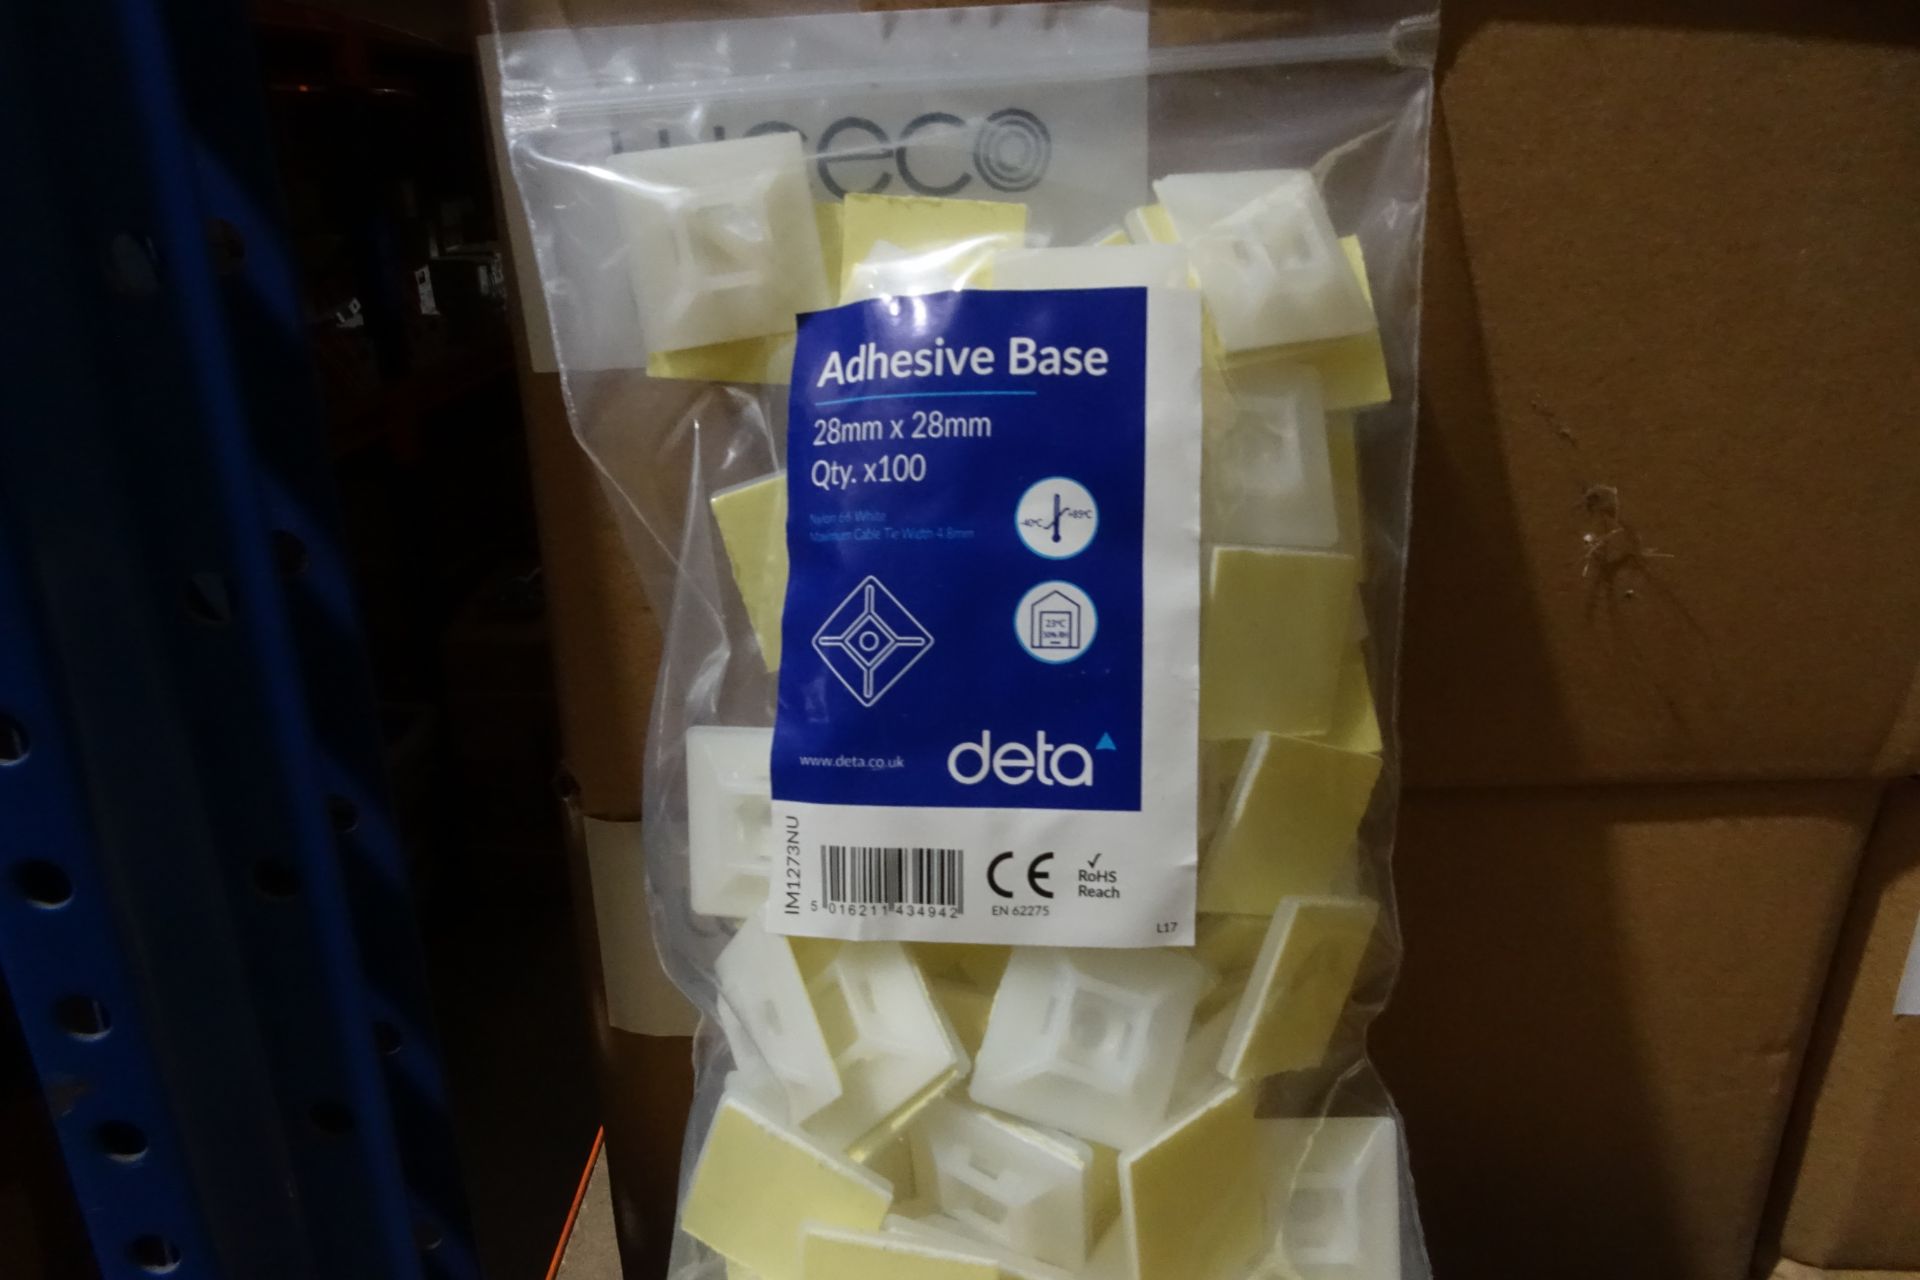 60 x Packs of DETA IM1273NU Adhesive Base Pads 28mm x 28mm 100 per pack Neutral